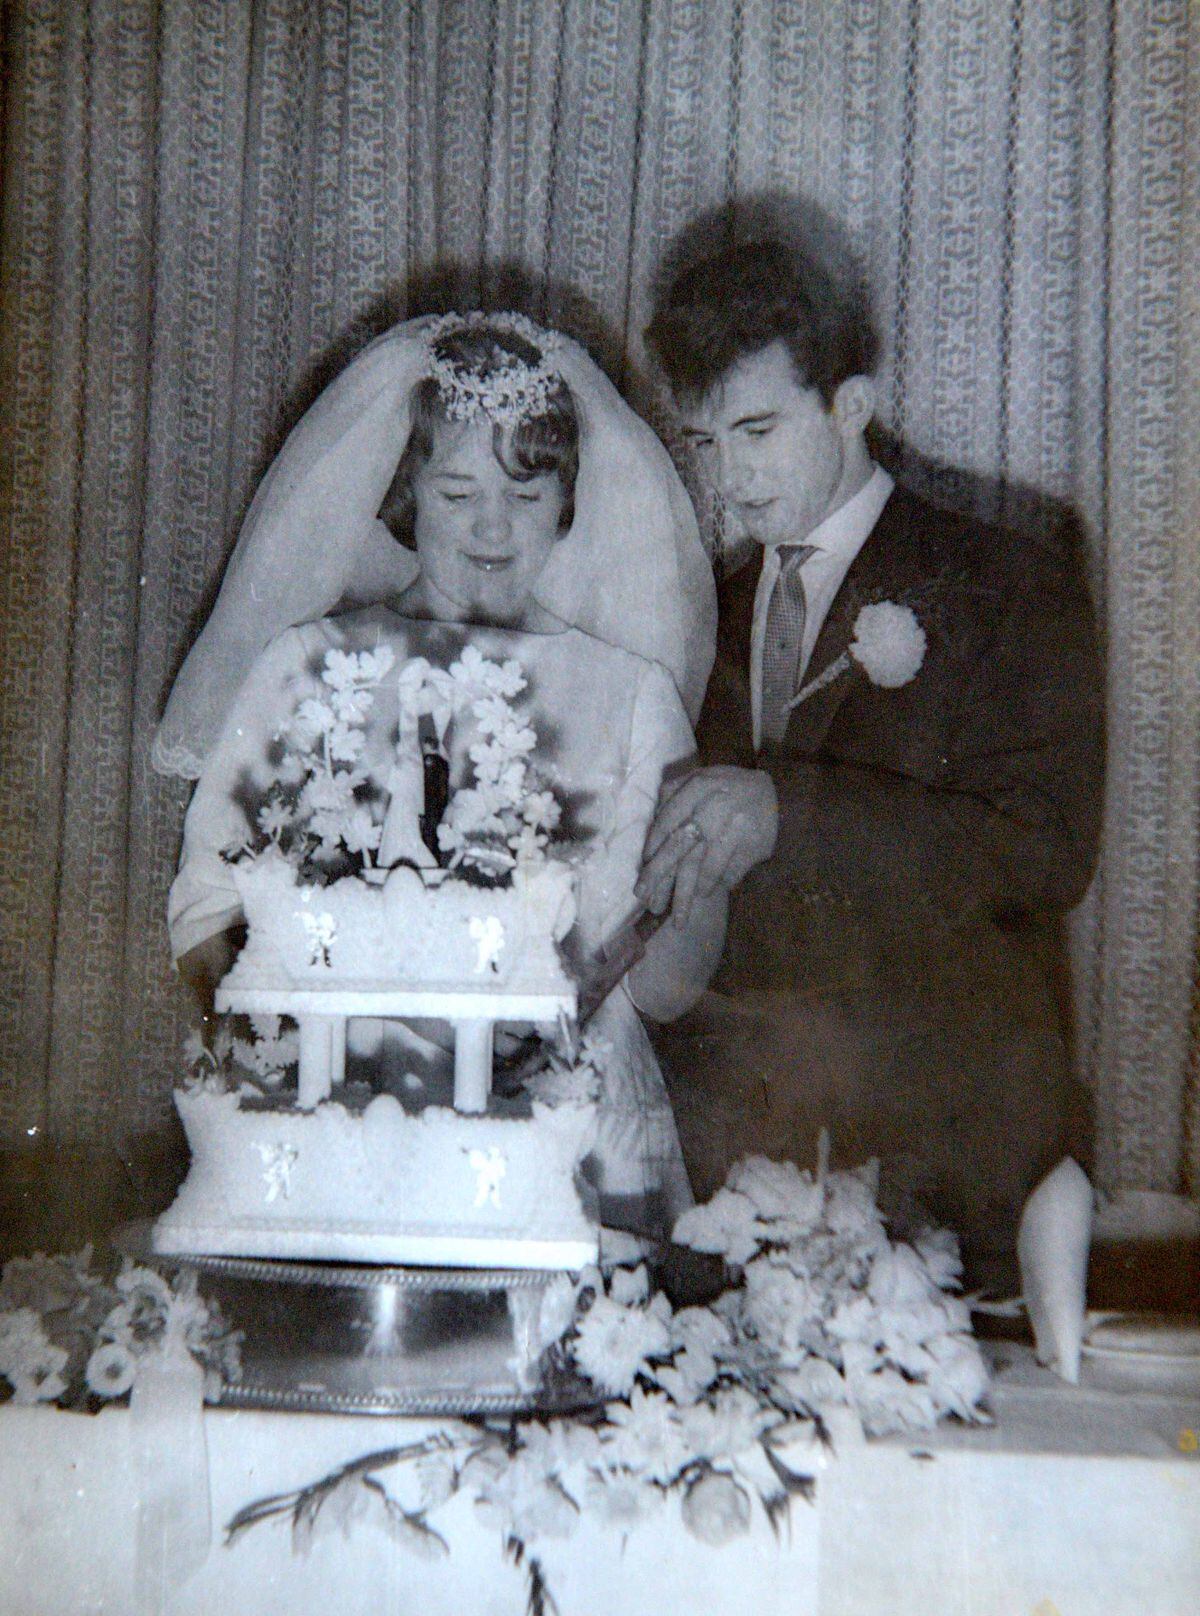 Margaret and Bernard cut the cake on their wedding day, September 9 1962